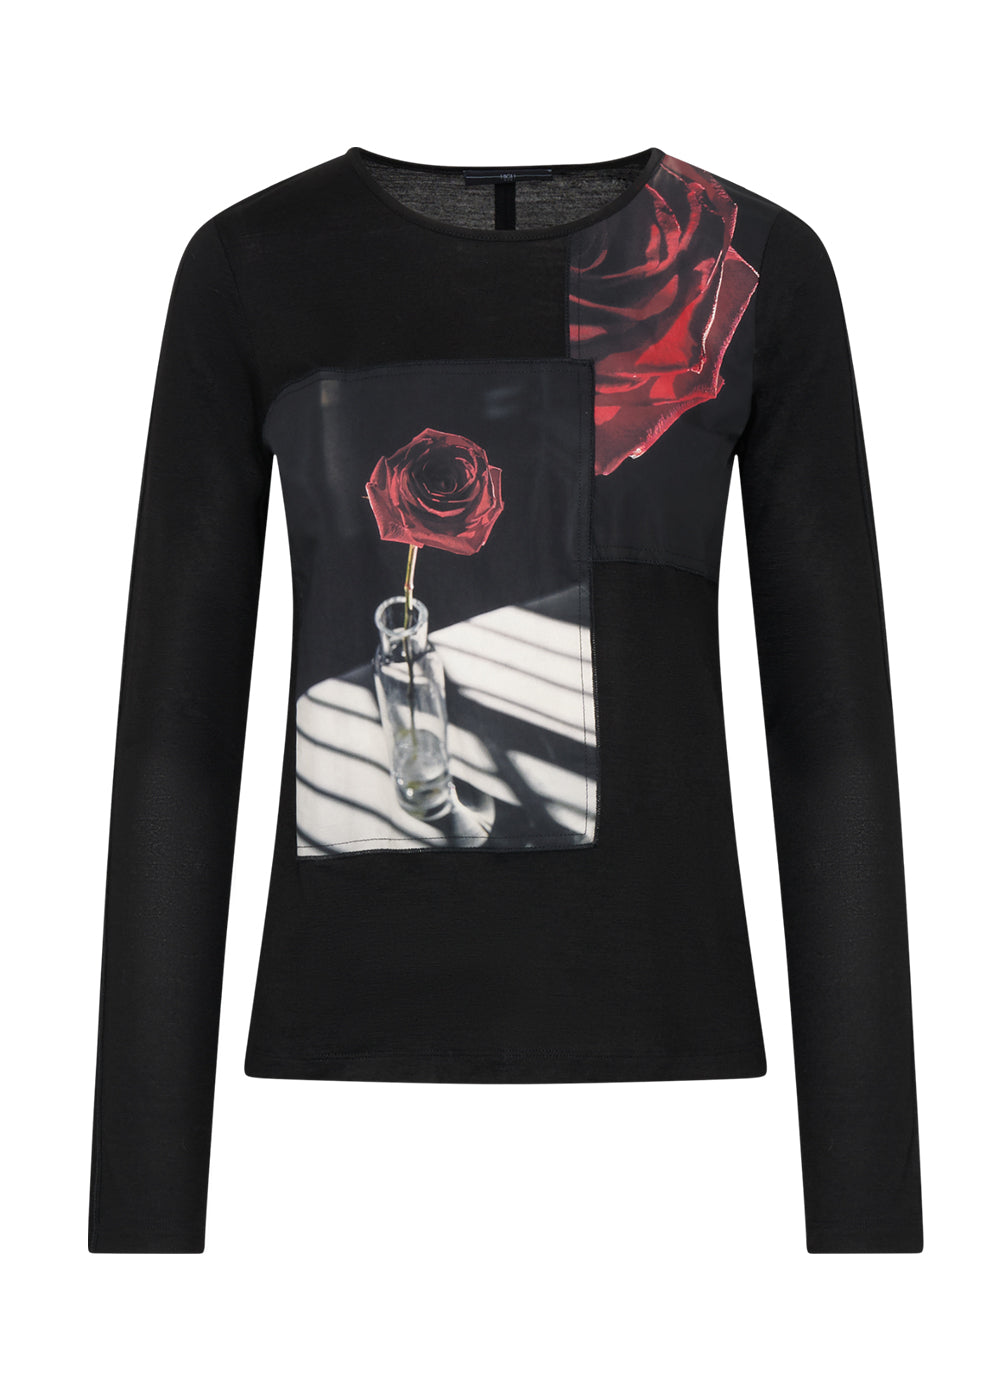 HIGH Langarm-Shirt RAPID schwarz aus Wolle mit rotem Rosen-Fotoprint limited edition